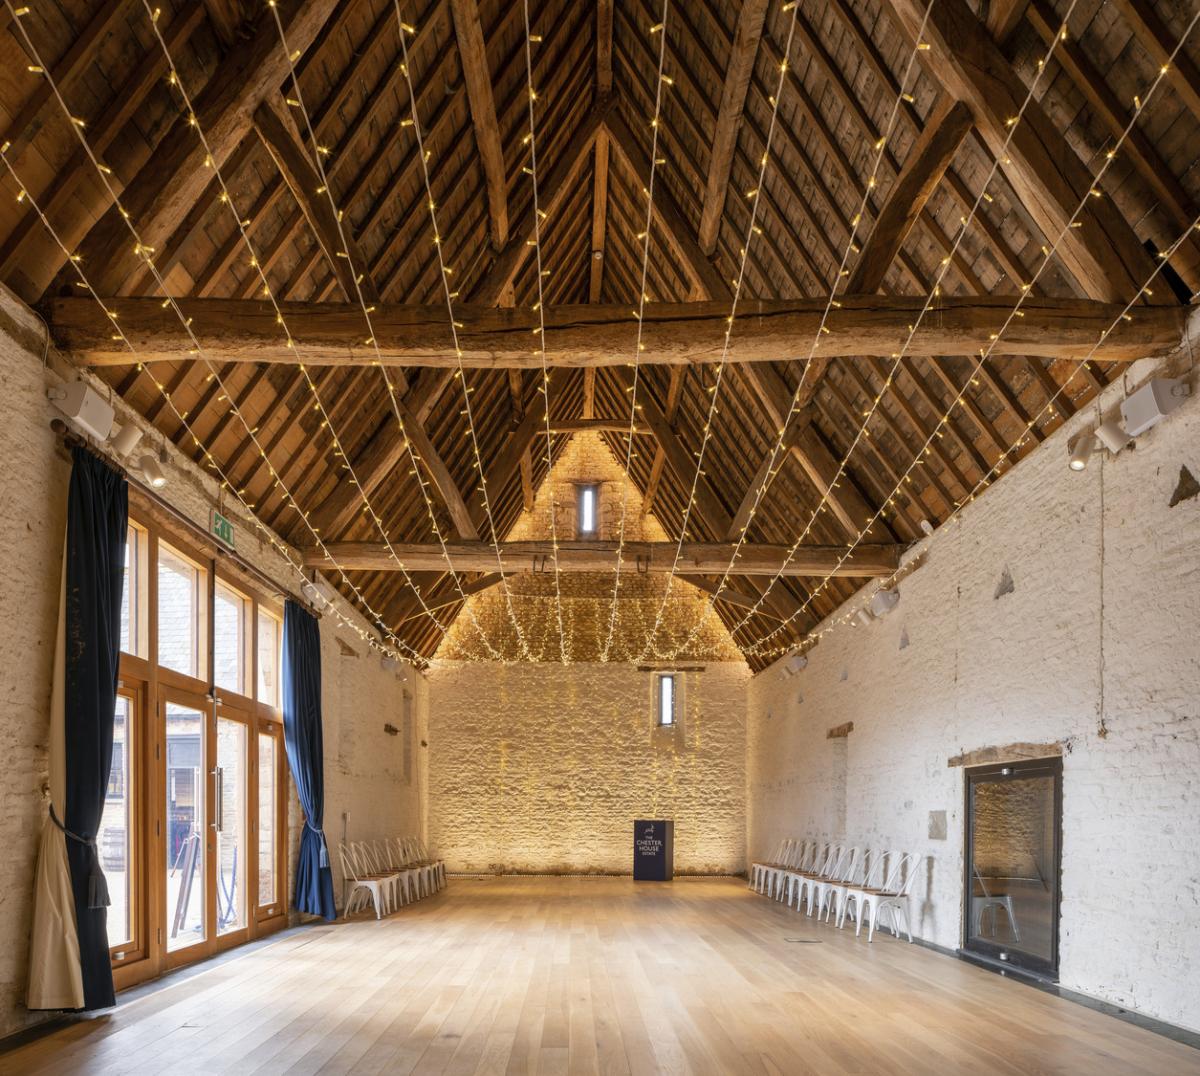 A restored historic barn interior